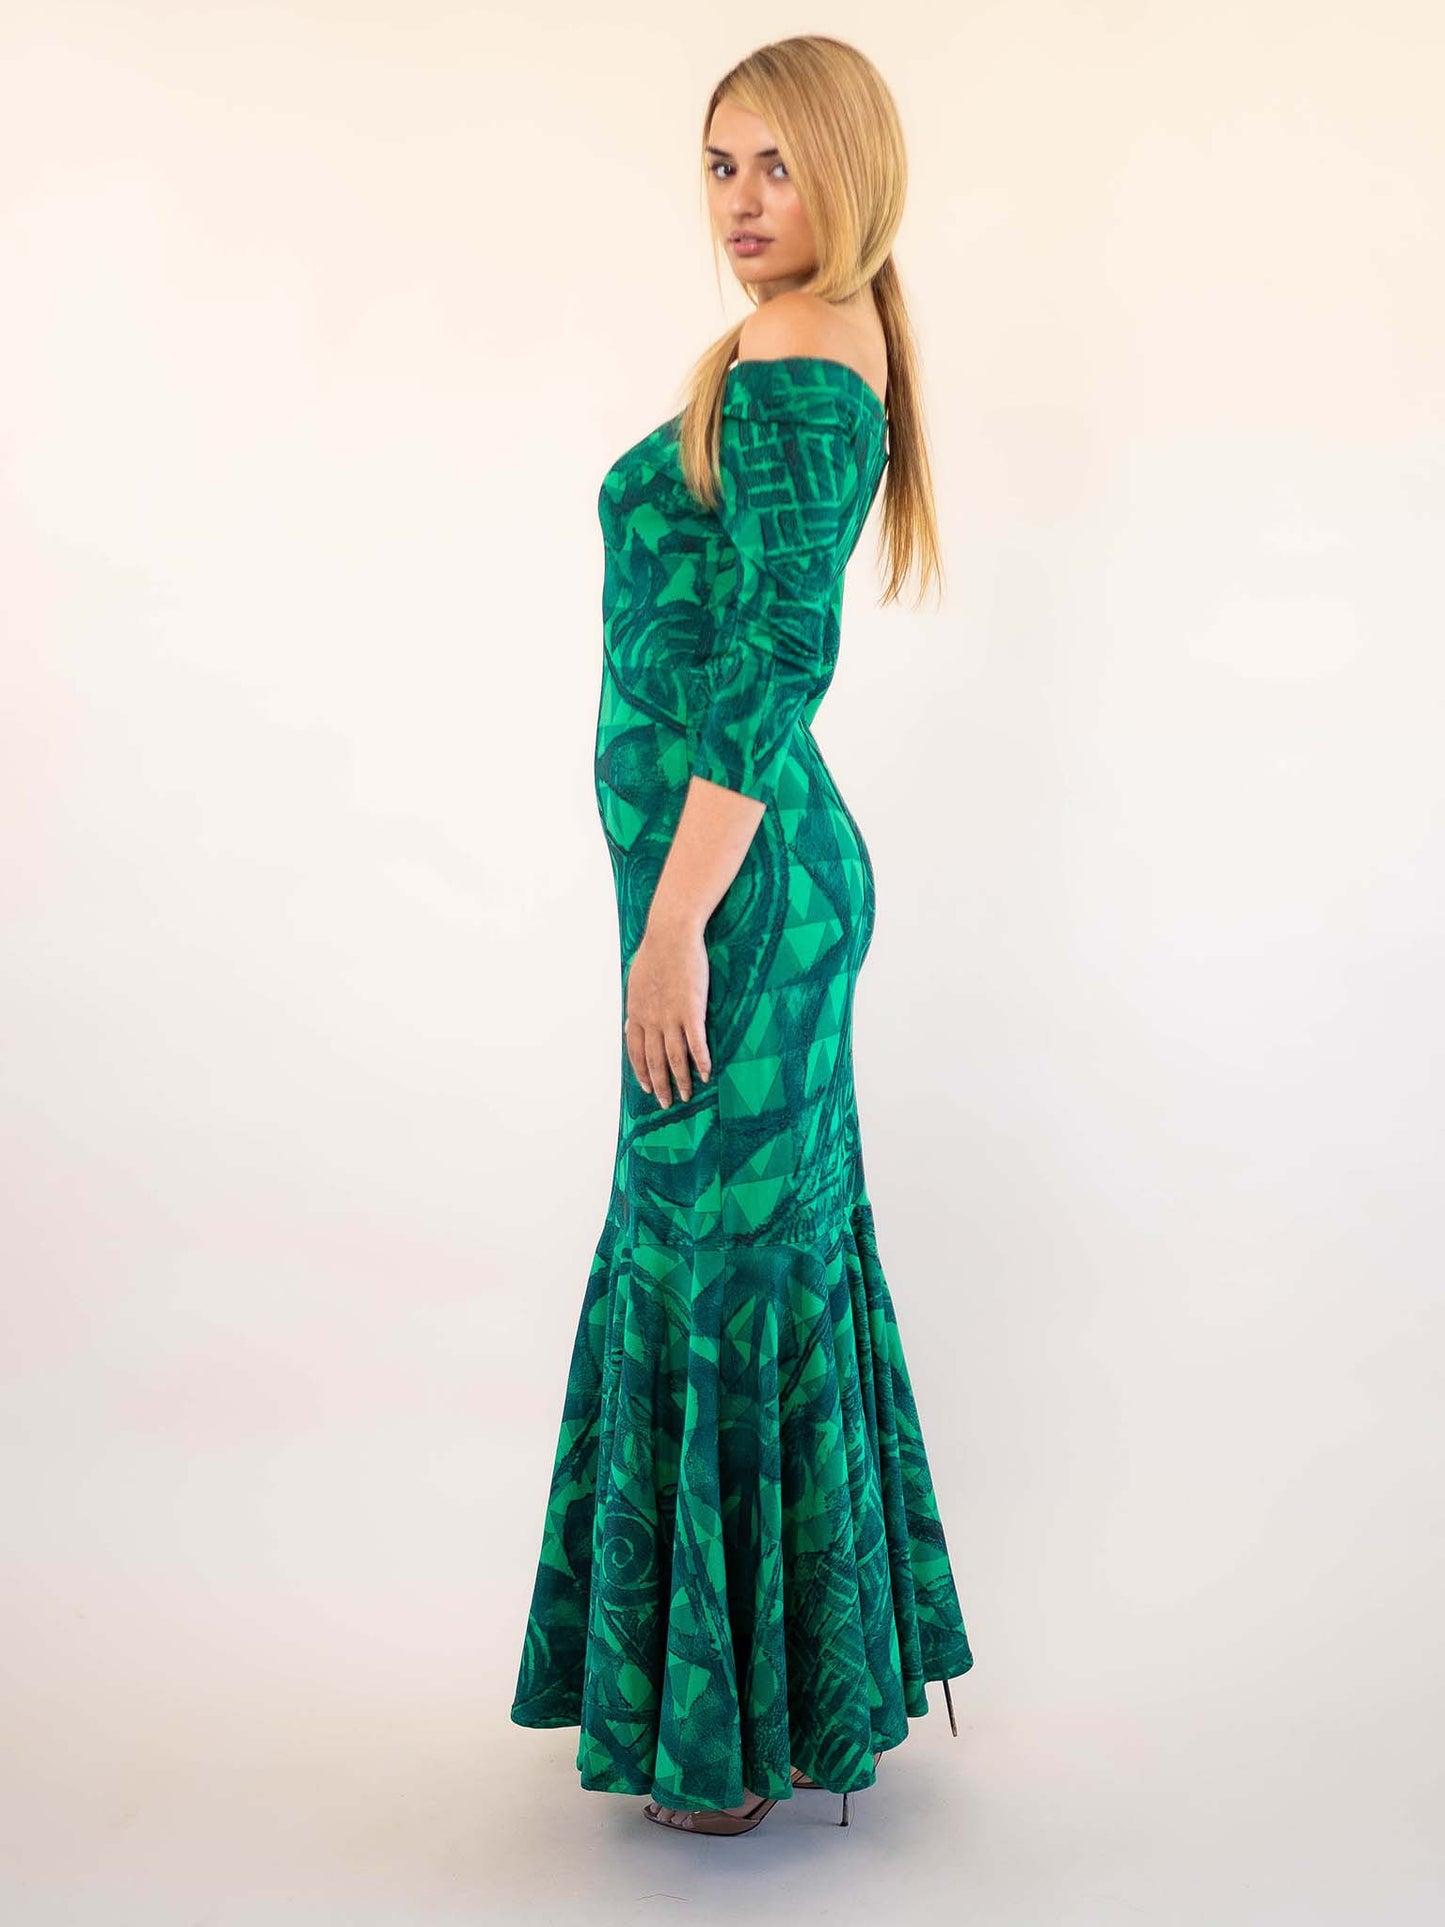 Vaihiria Dress - Emerald